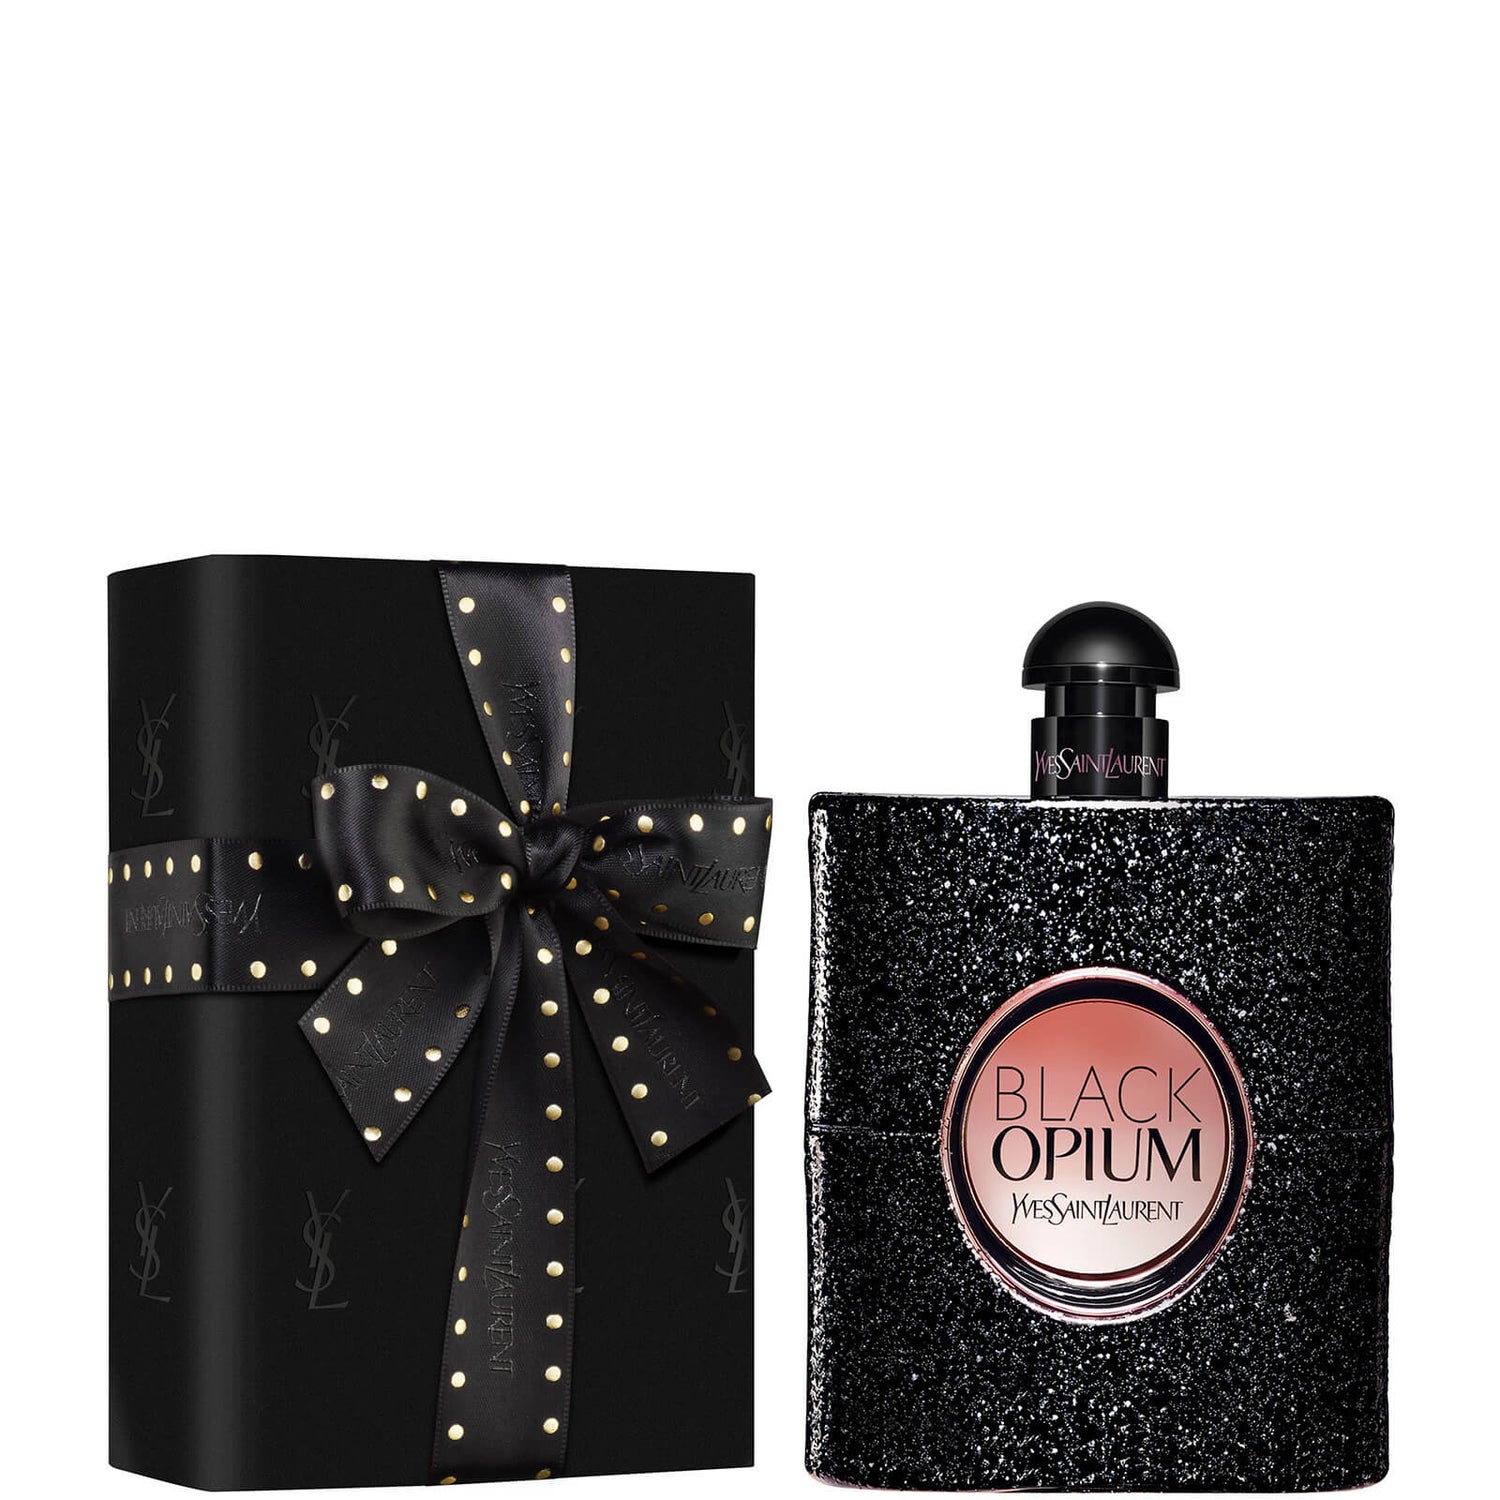 Yves Saint Laurent Apă de parfum Black Opium preambalată - 150ml